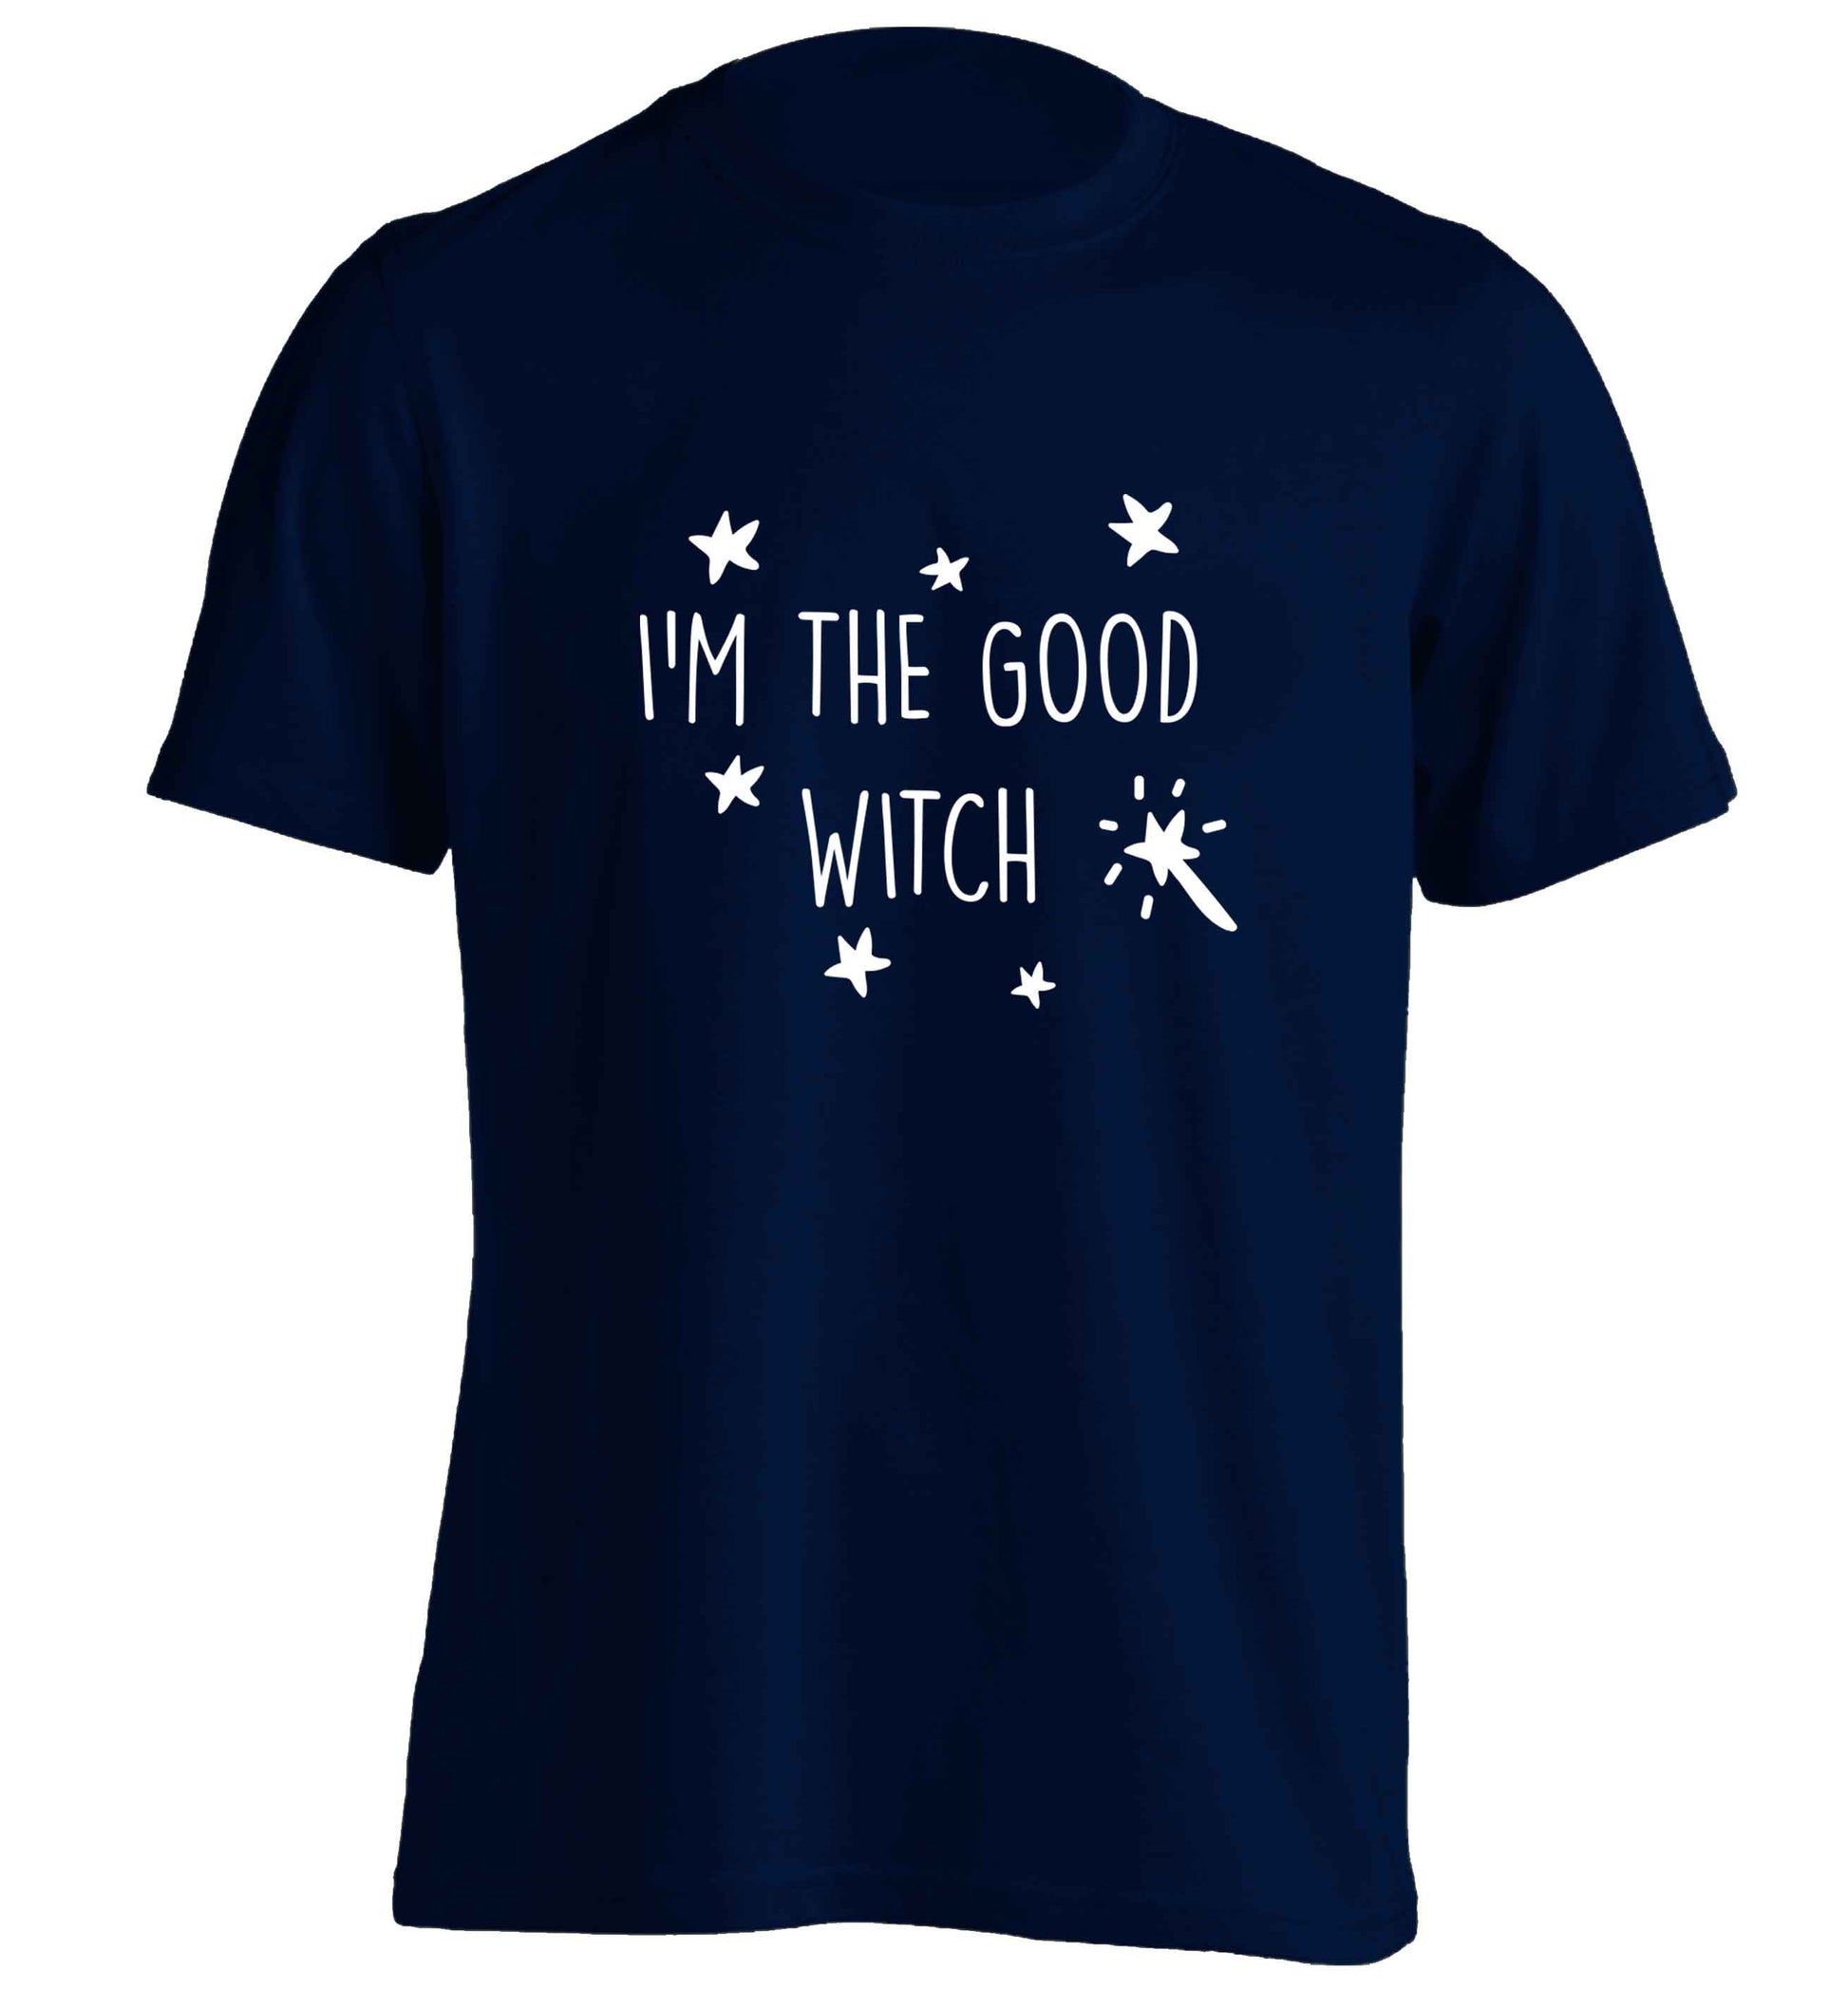 Good witch adults unisex navy Tshirt 2XL